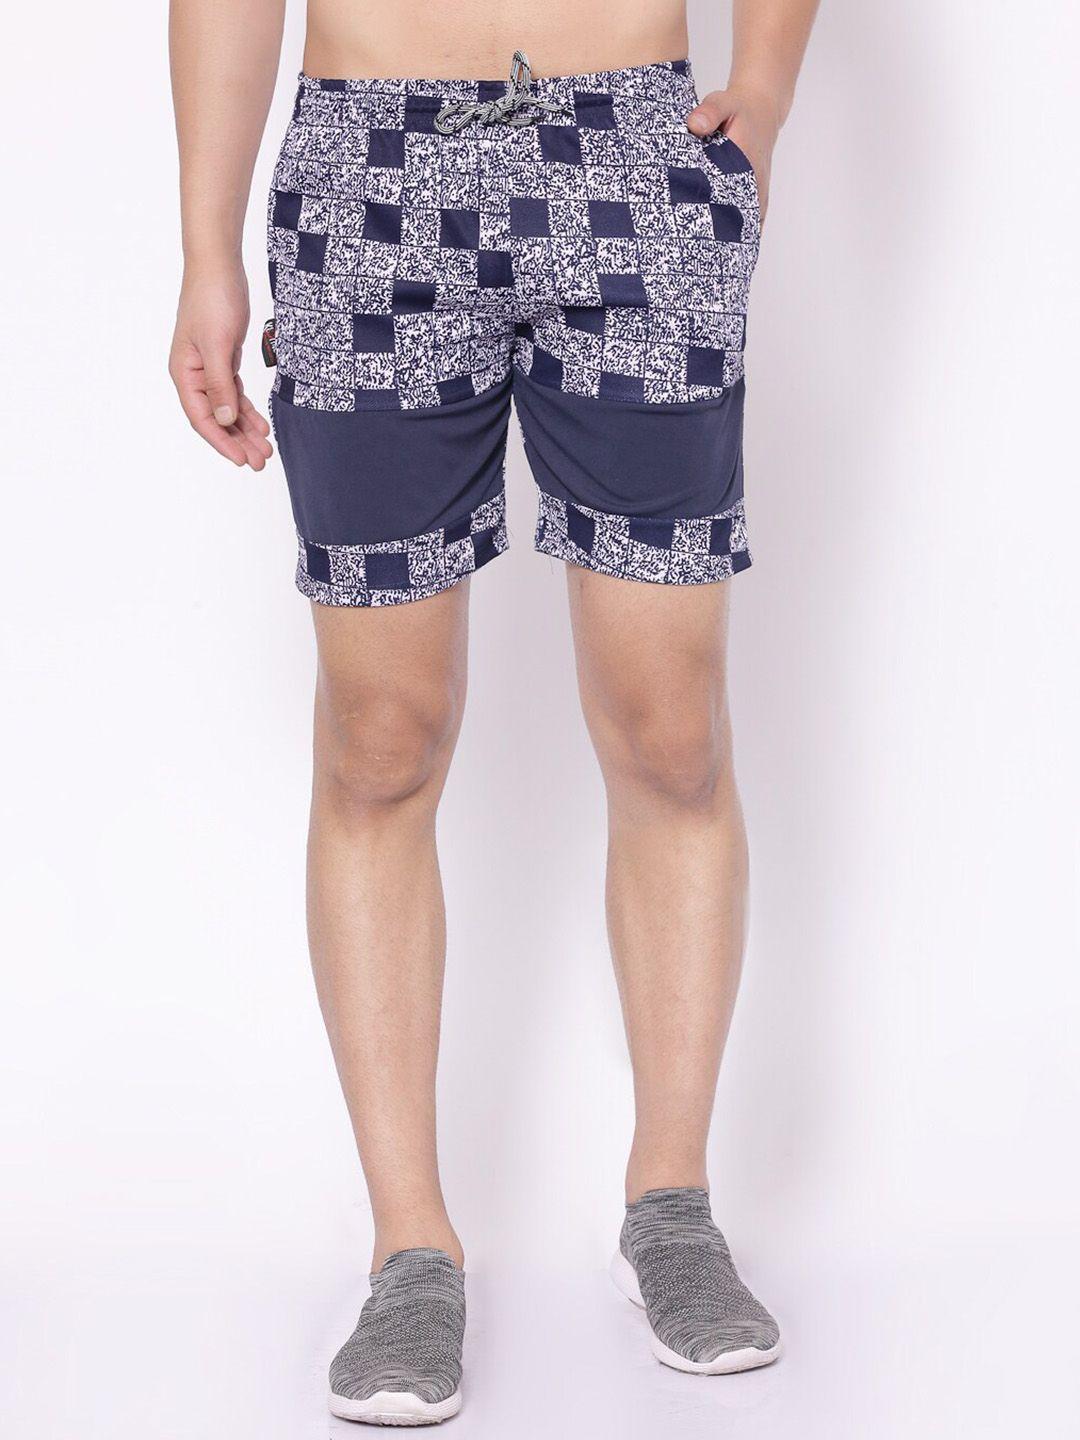 klotthe-geometric-printed-rapid-dry-sports-shorts